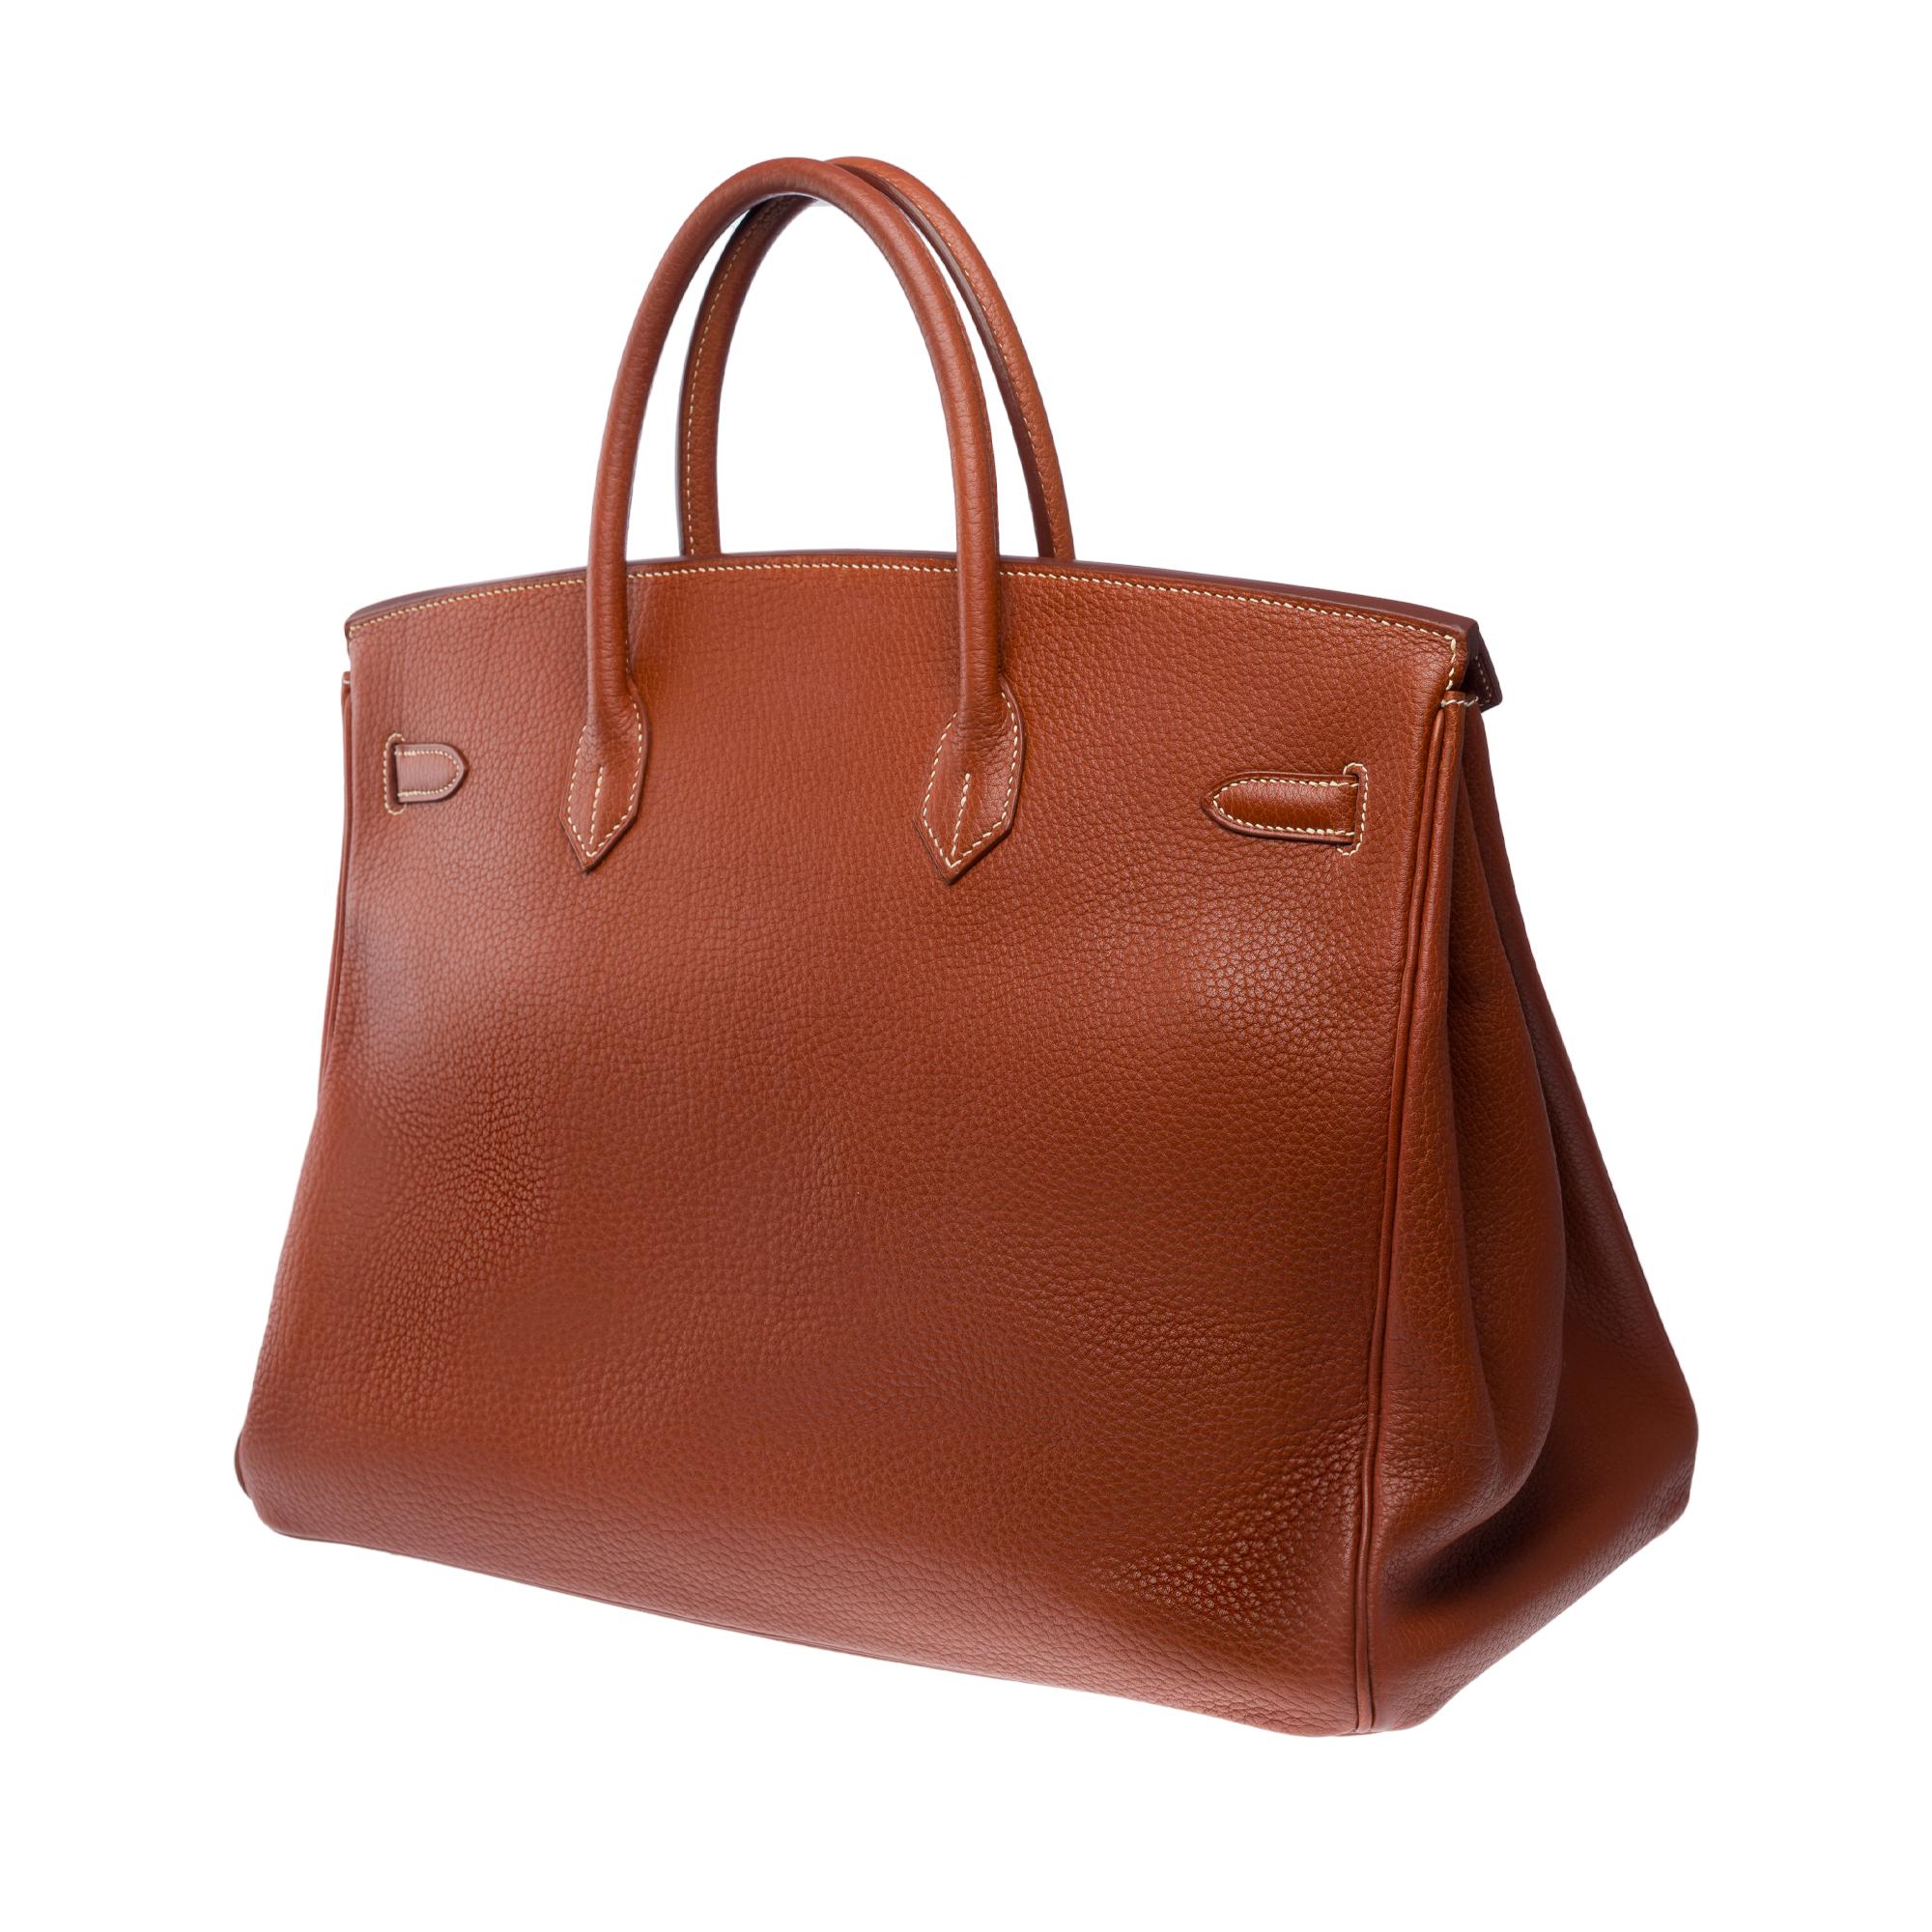 Classy & Rare Hermes Birkin 40 handbag in Brick Fjord leather, GHW 2